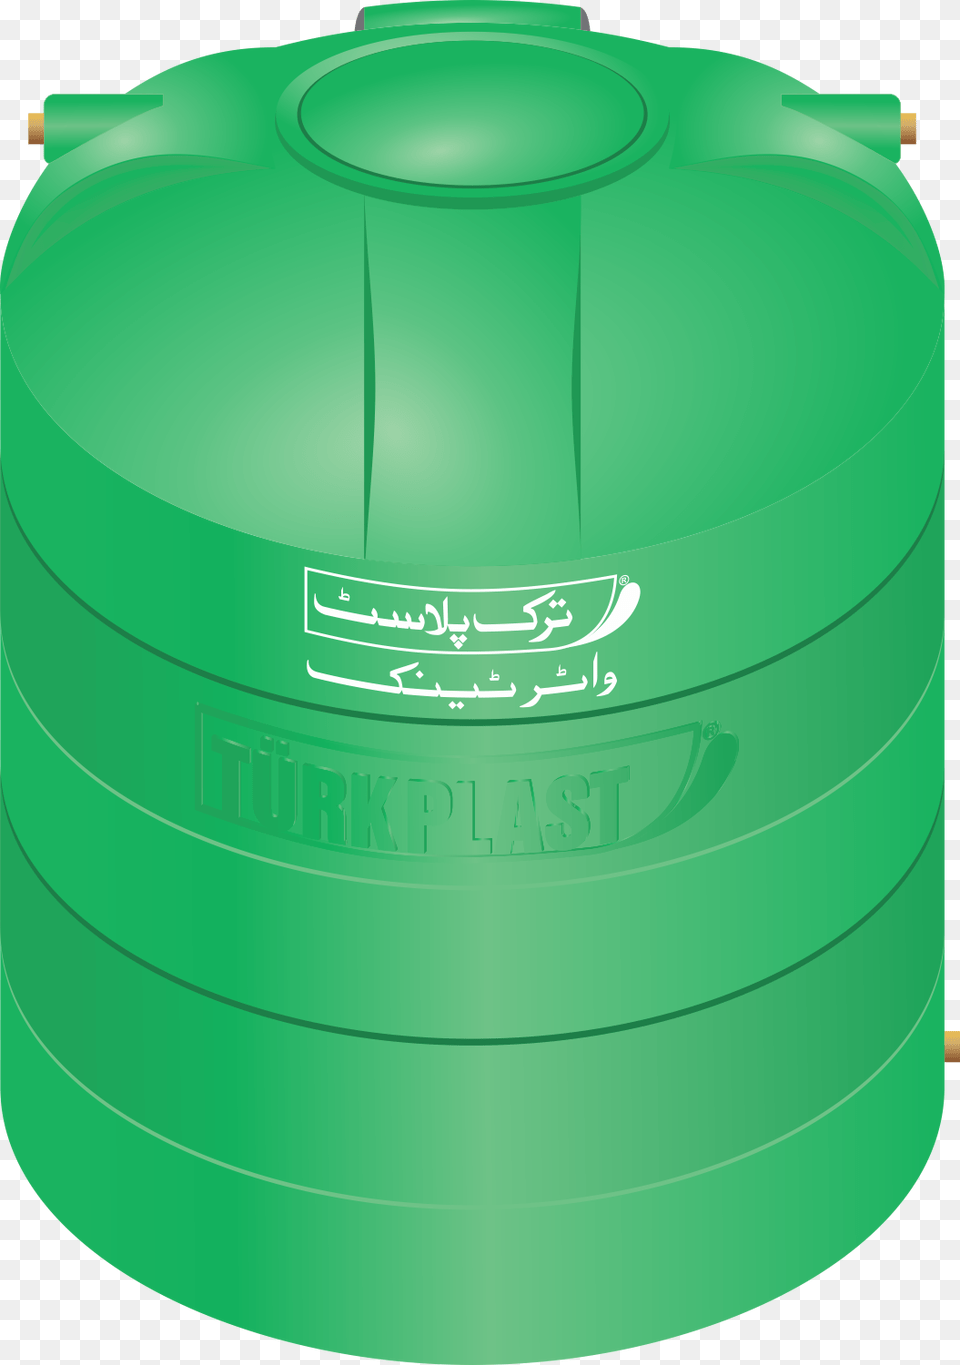 Turk Plast Water Tank Green Turk Plast Water Tank Price, Ammunition, Grenade, Weapon Free Png Download